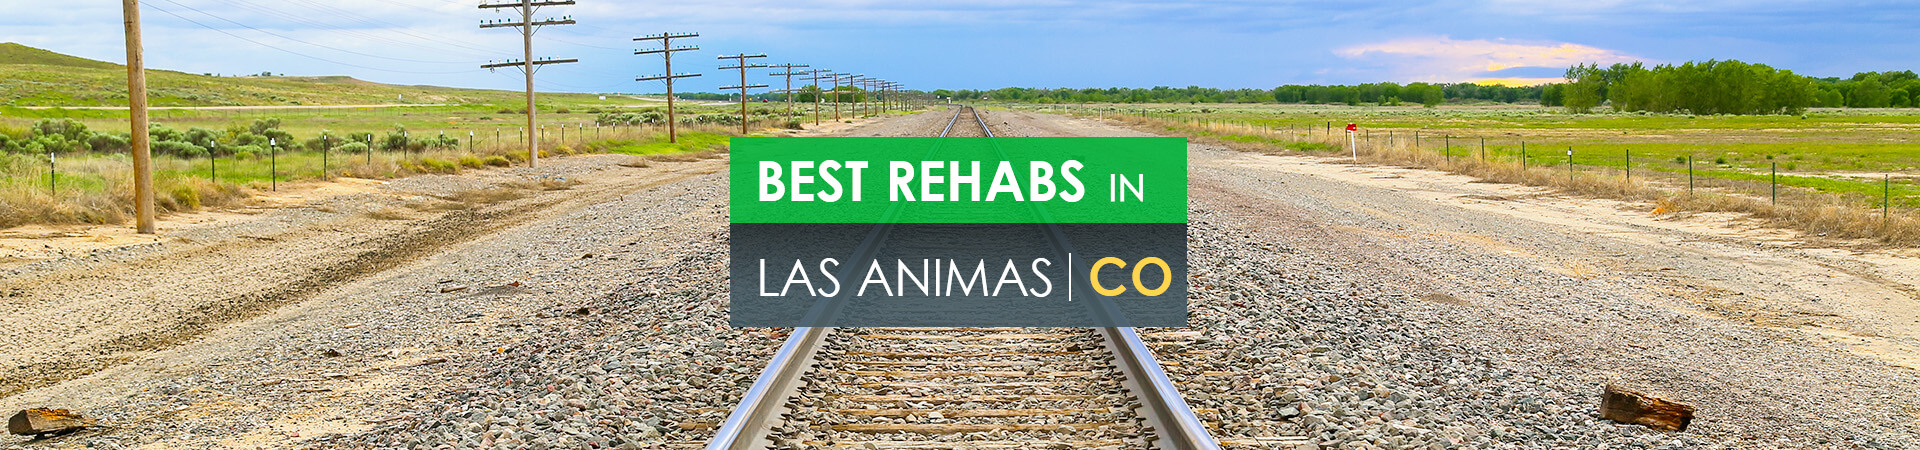 Best rehabs in Las Animas, CO